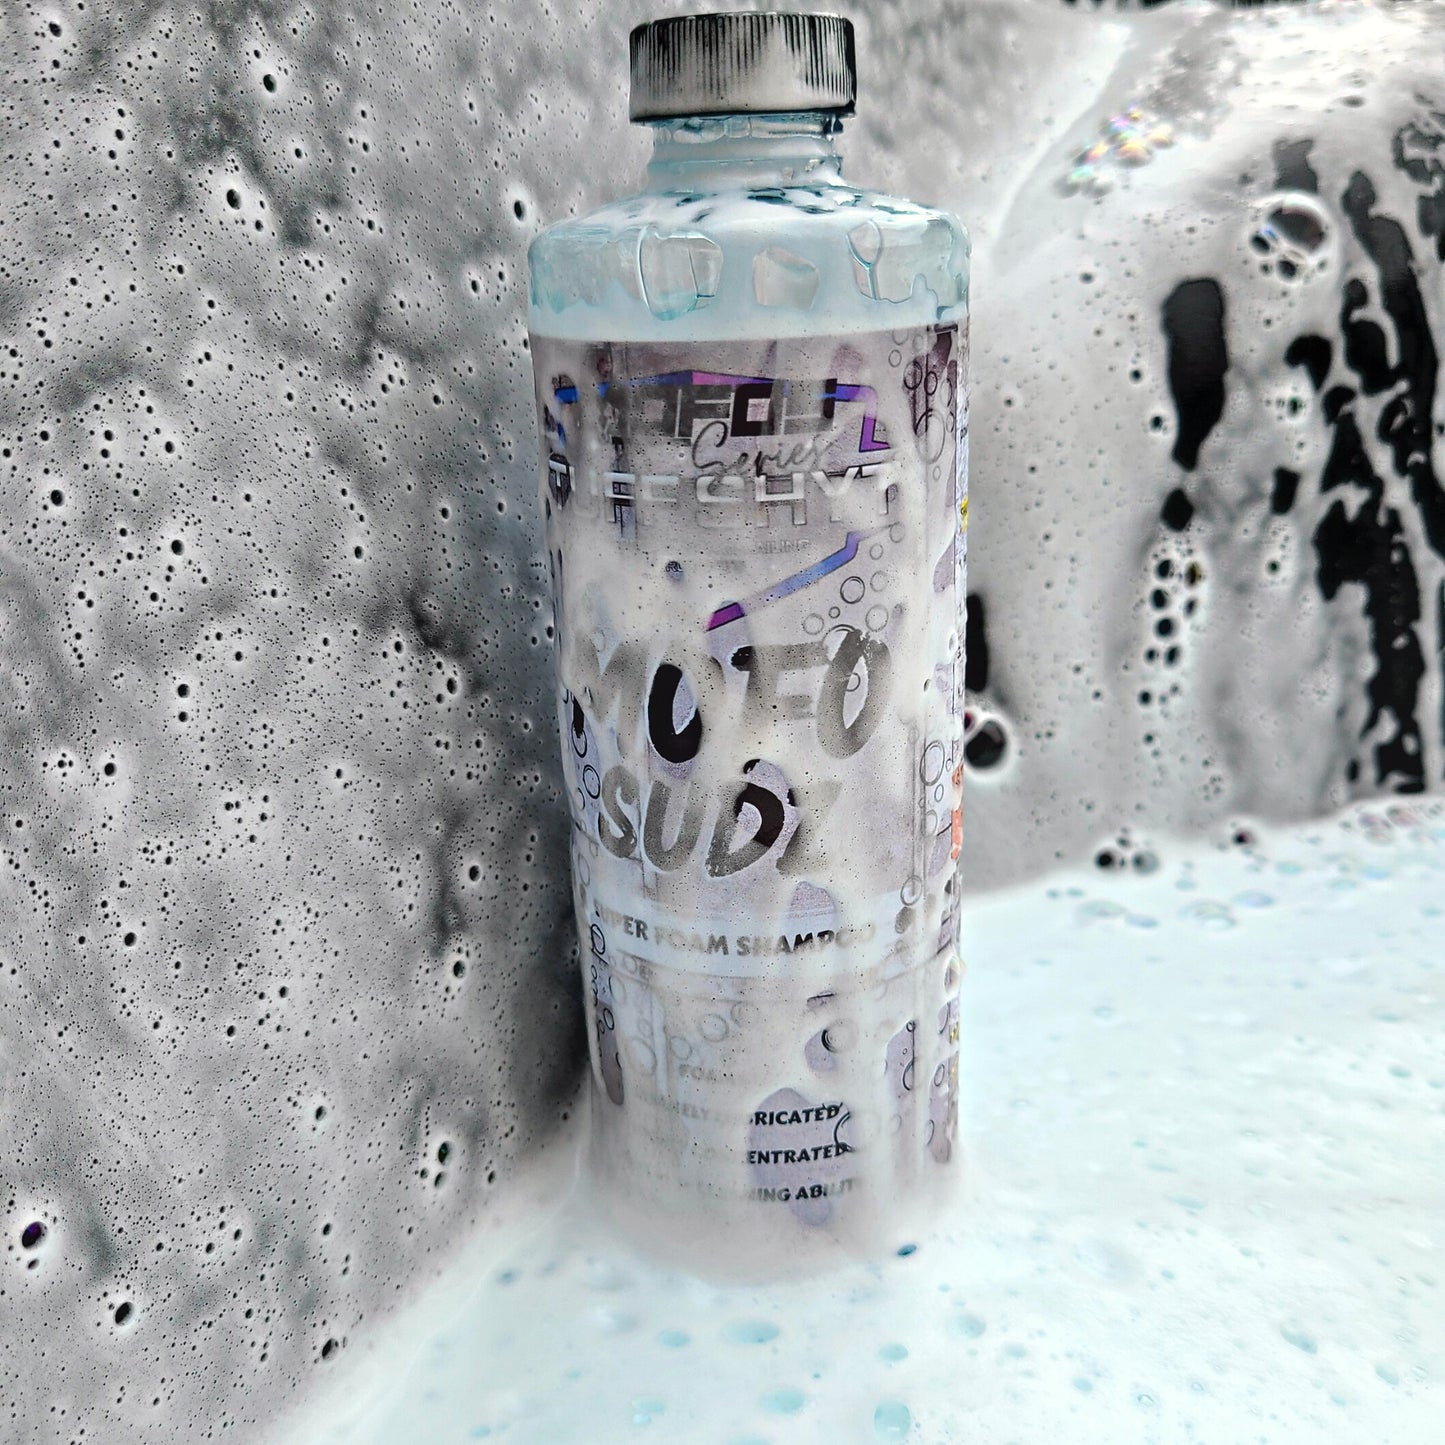 MOFO Sudz - Super Foam Shampoo